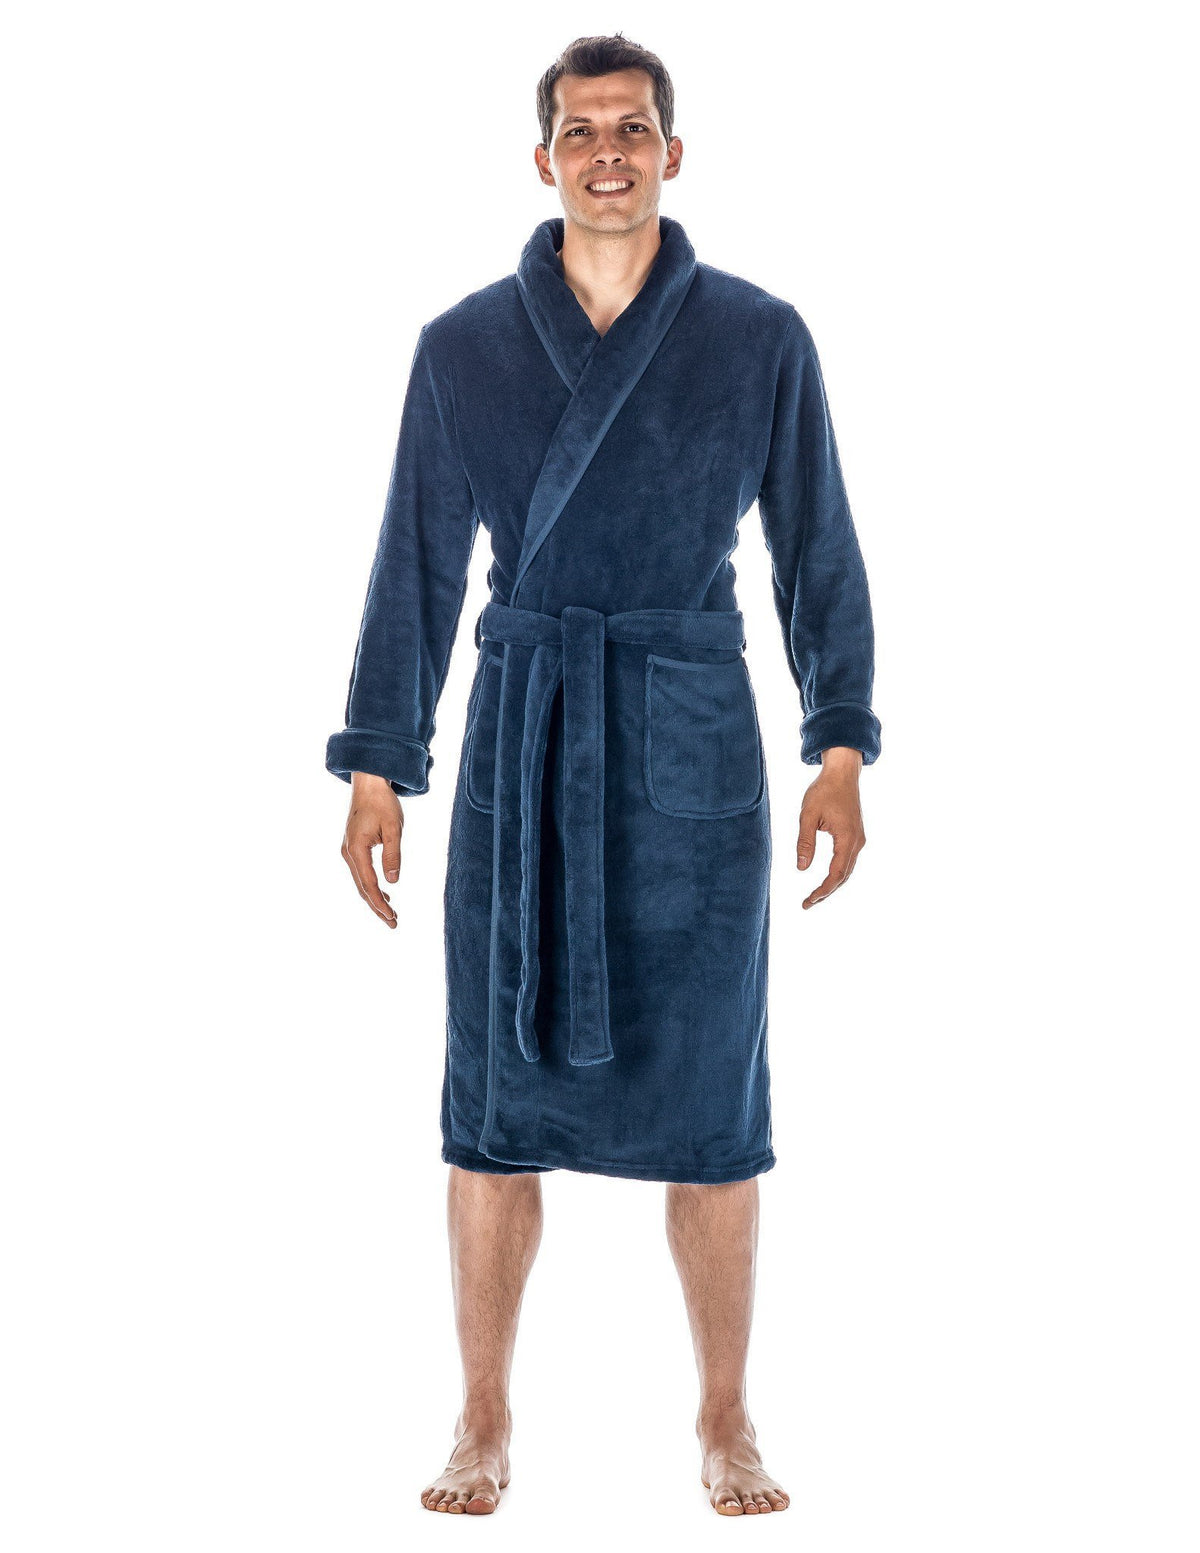 Men's Premium Coral Fleece Plush Spa/Bath Robe - Navy